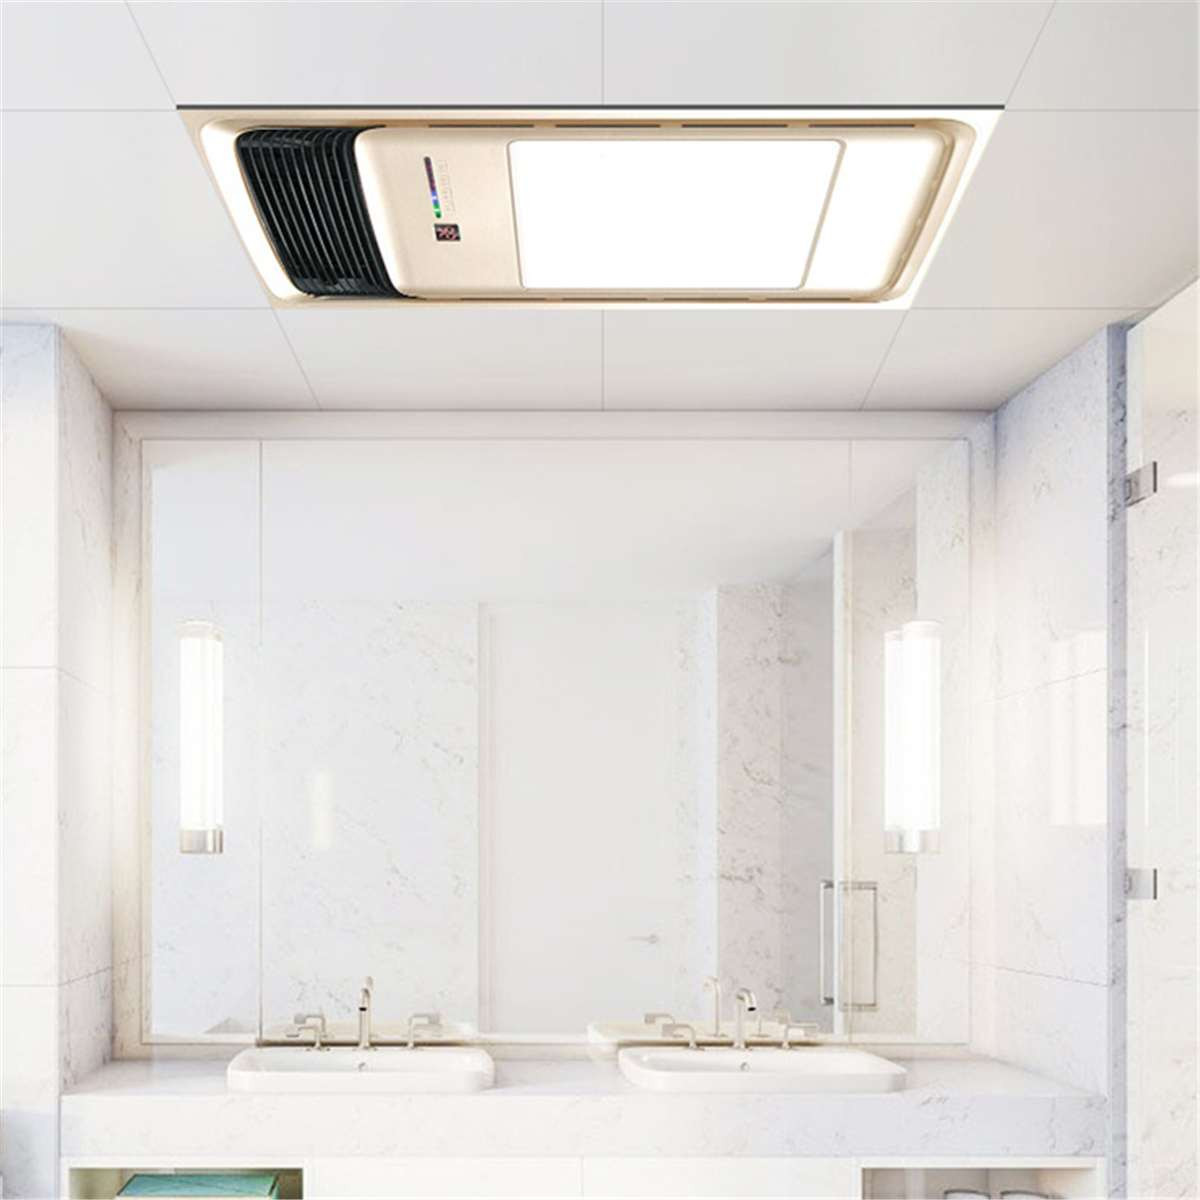 Bathroom Ceiling Light With Heater
 220V Bathroom Electric Heater Exhaust Fan Warmer Ceiling